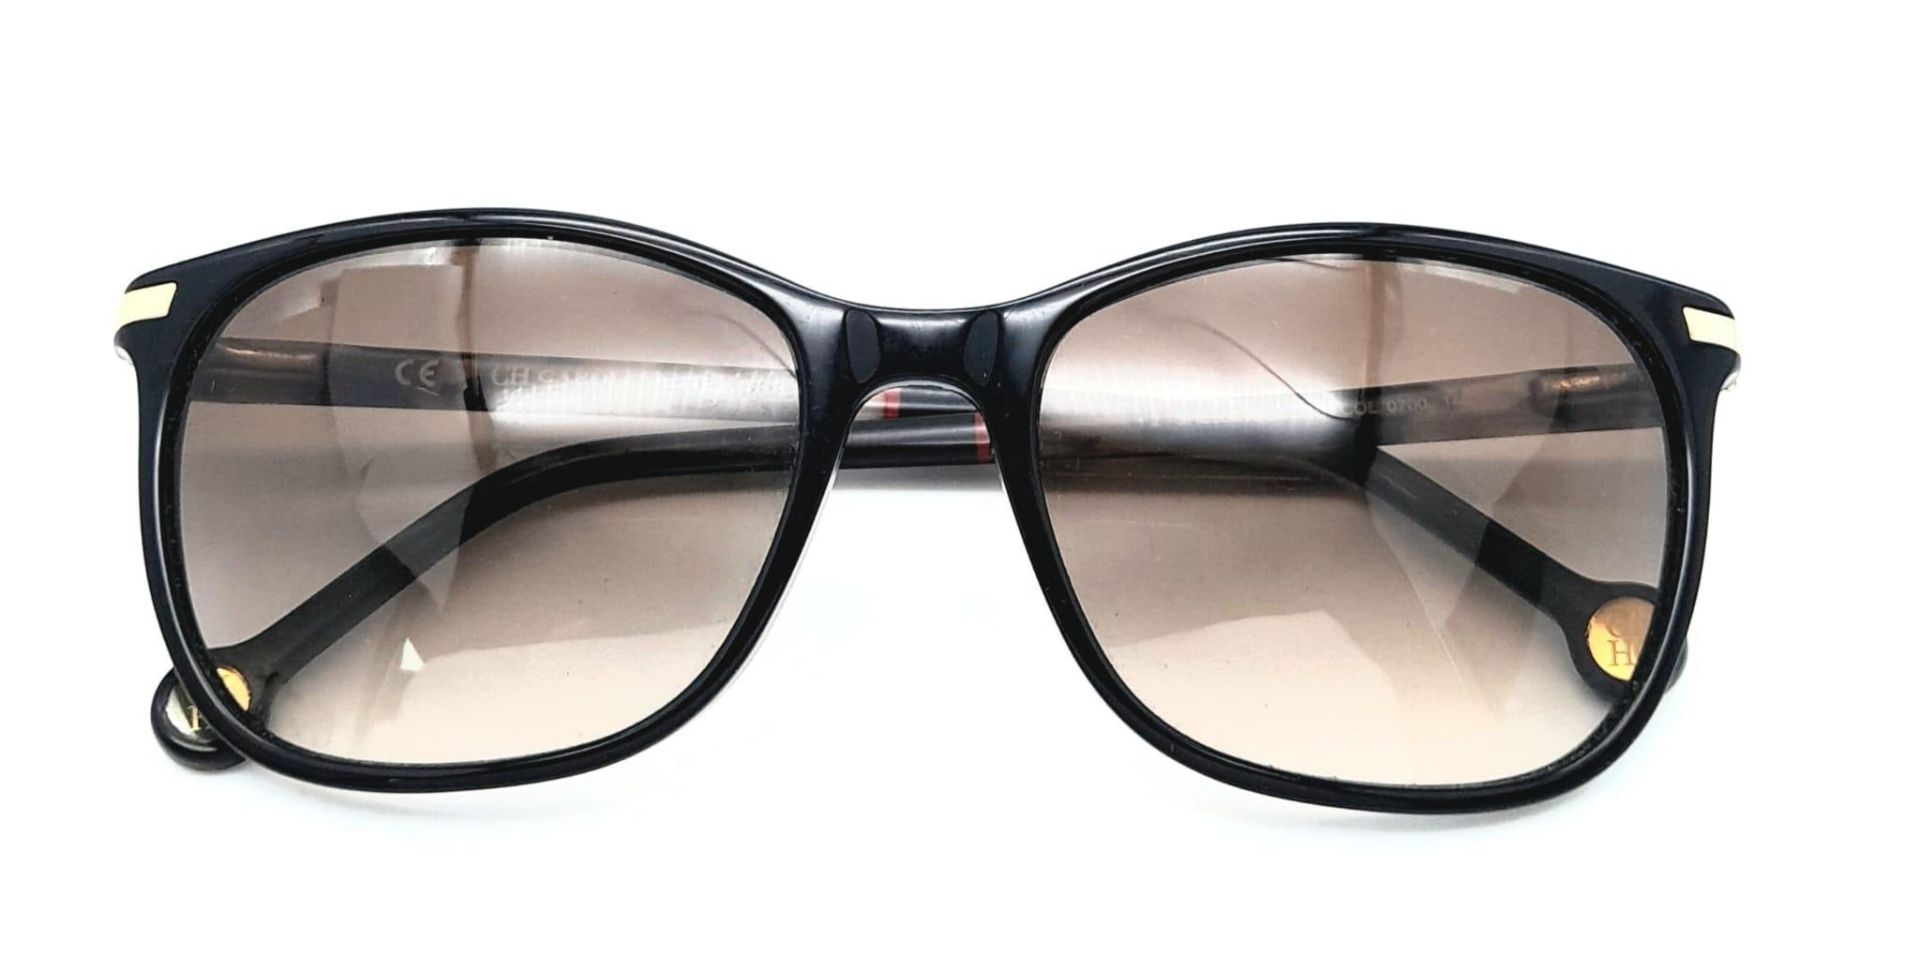 A Pair of Designer Carolina Herrera Sunglasses. Good condition. - Image 2 of 6